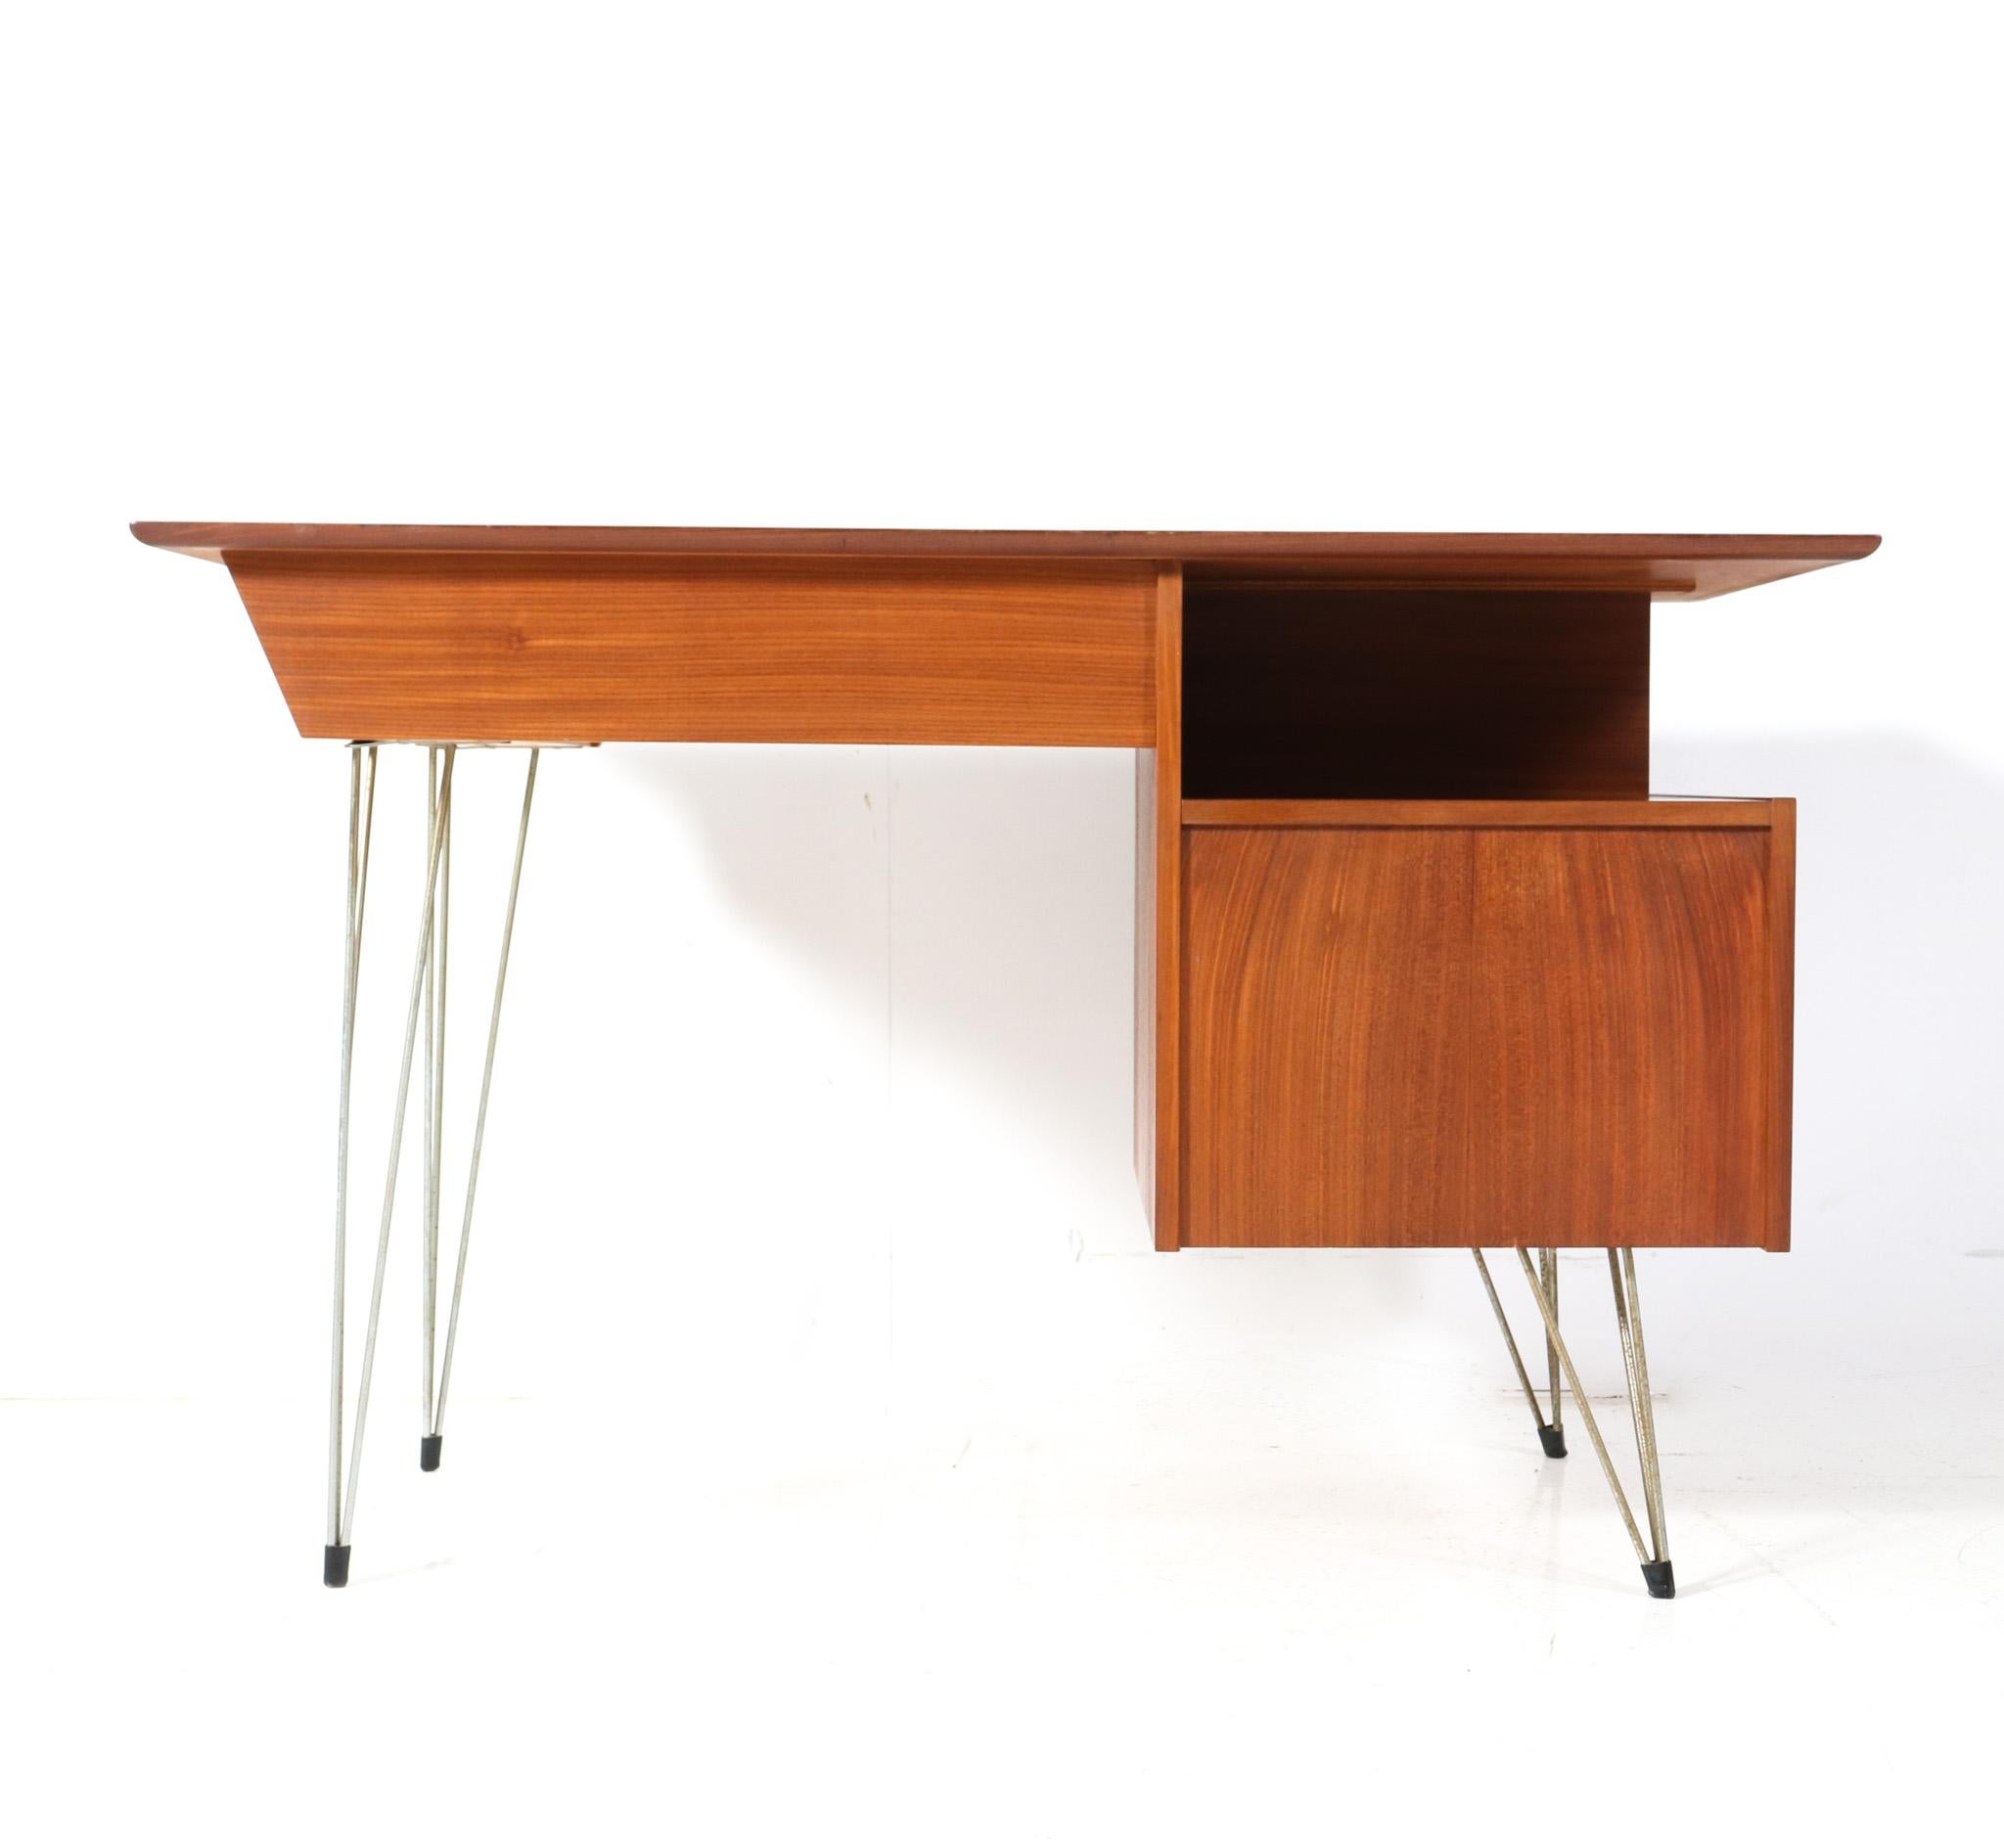 Mid-20th Century Teak Mid-Century Modern Desk or Writing Table by Louis van Teeffelen for WéBé For Sale